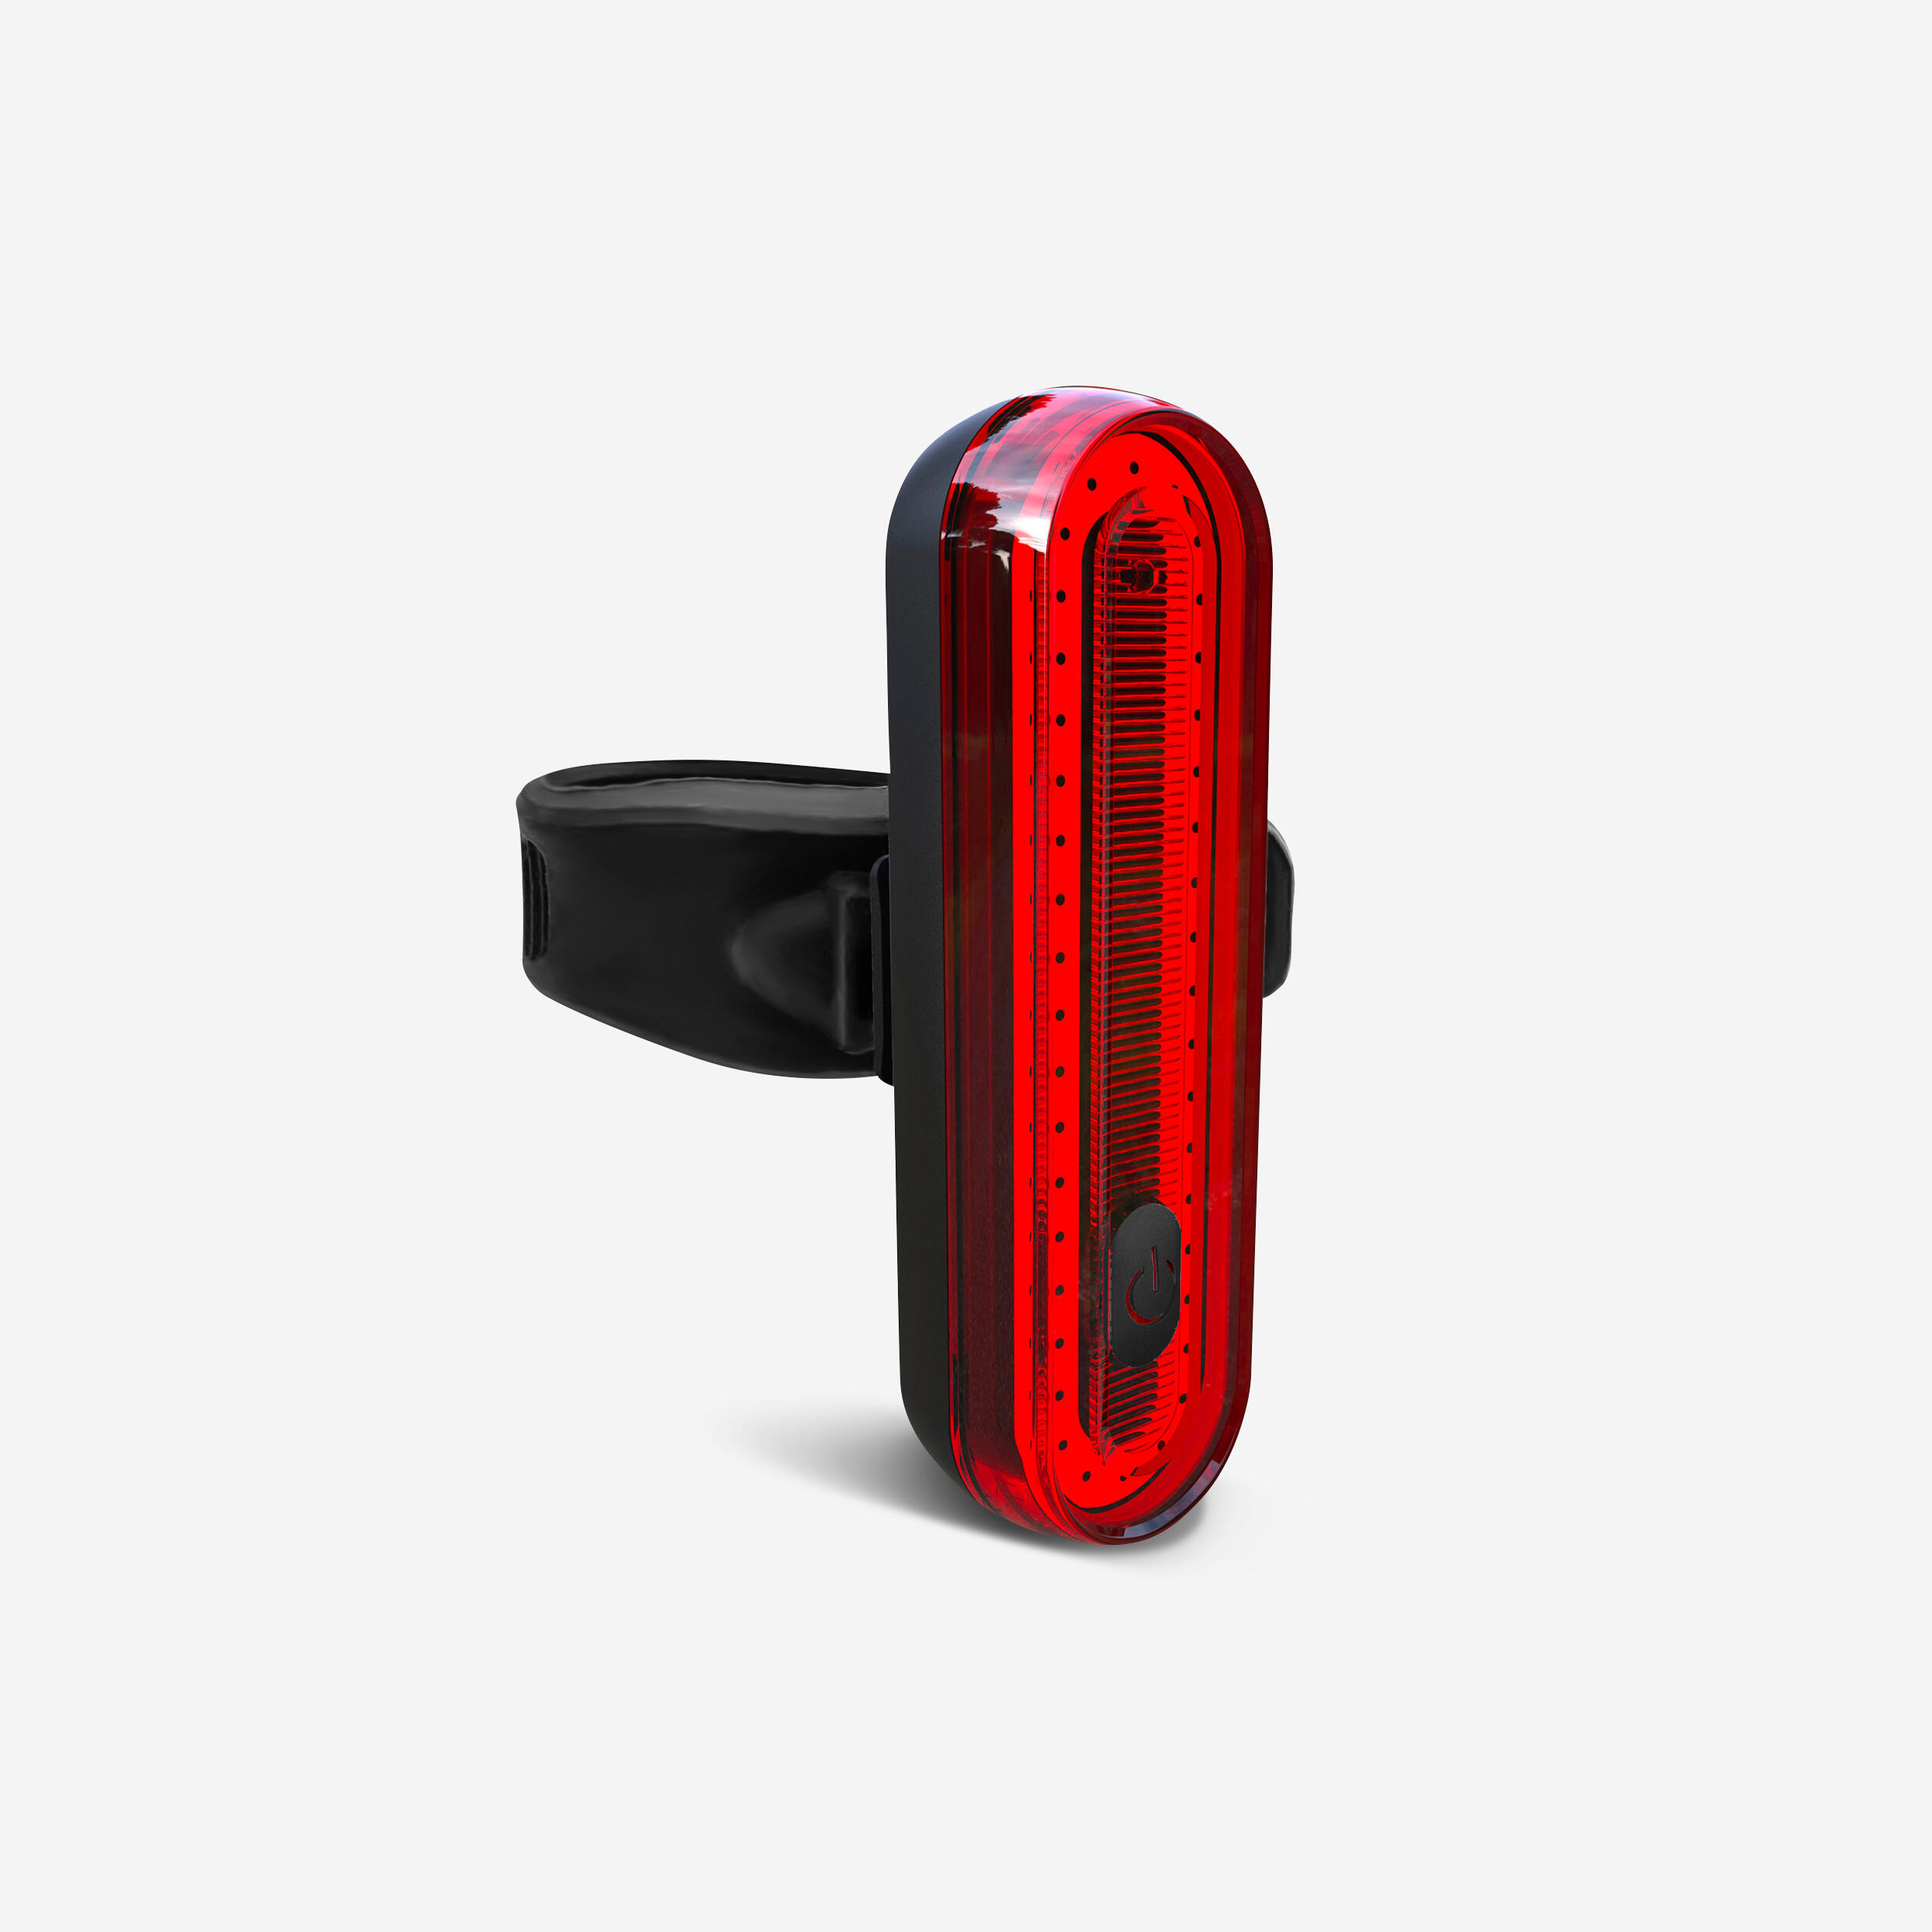 BÜCHEL Rear Light Micro Lens COB USB with Deceleration Sensor